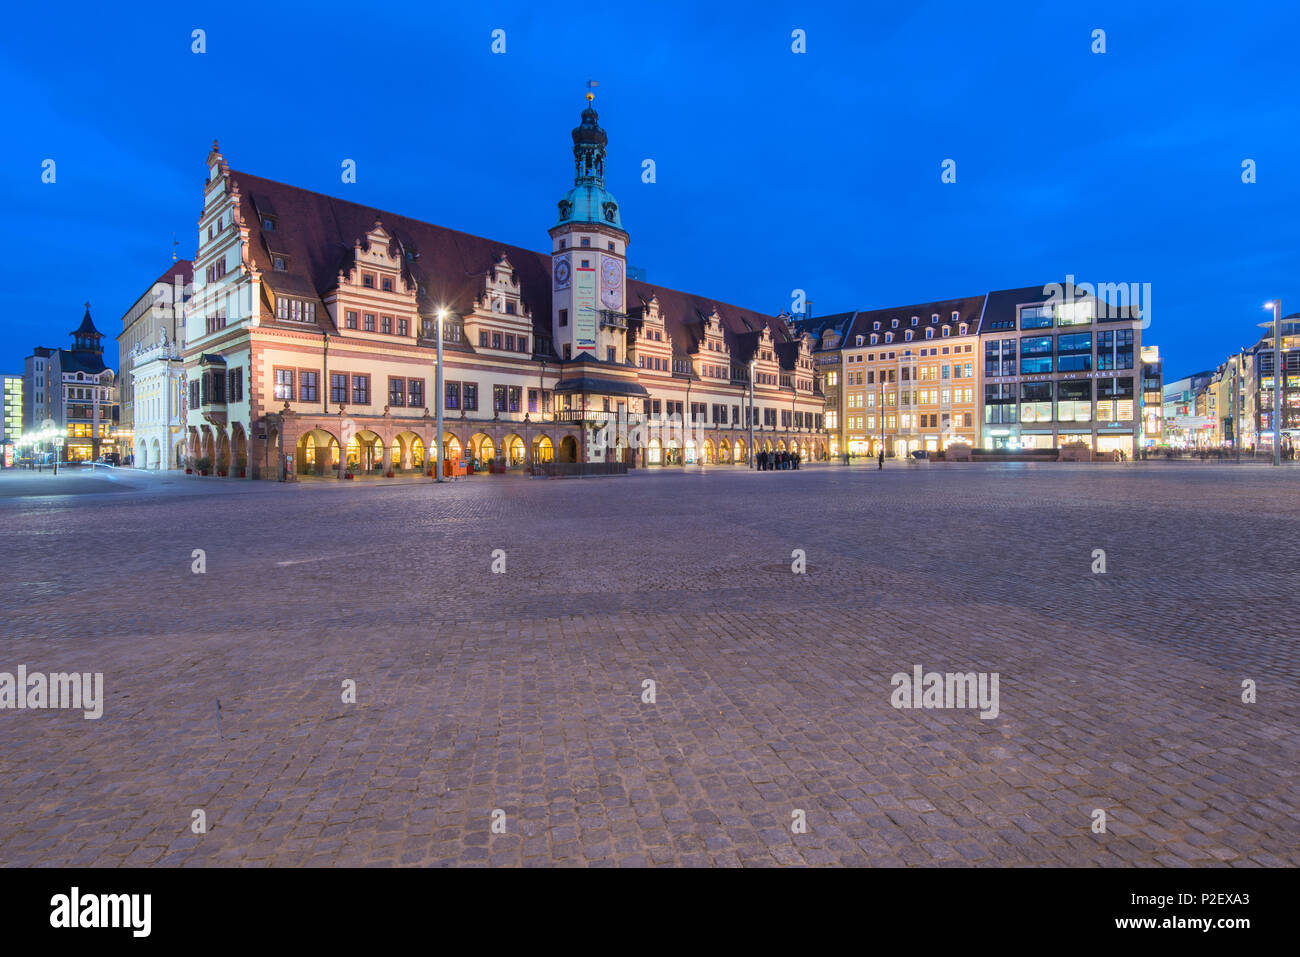 Architecture, Exterior View, Market Place, Saxony, Leipzig, Germany, Europe Stock Photo